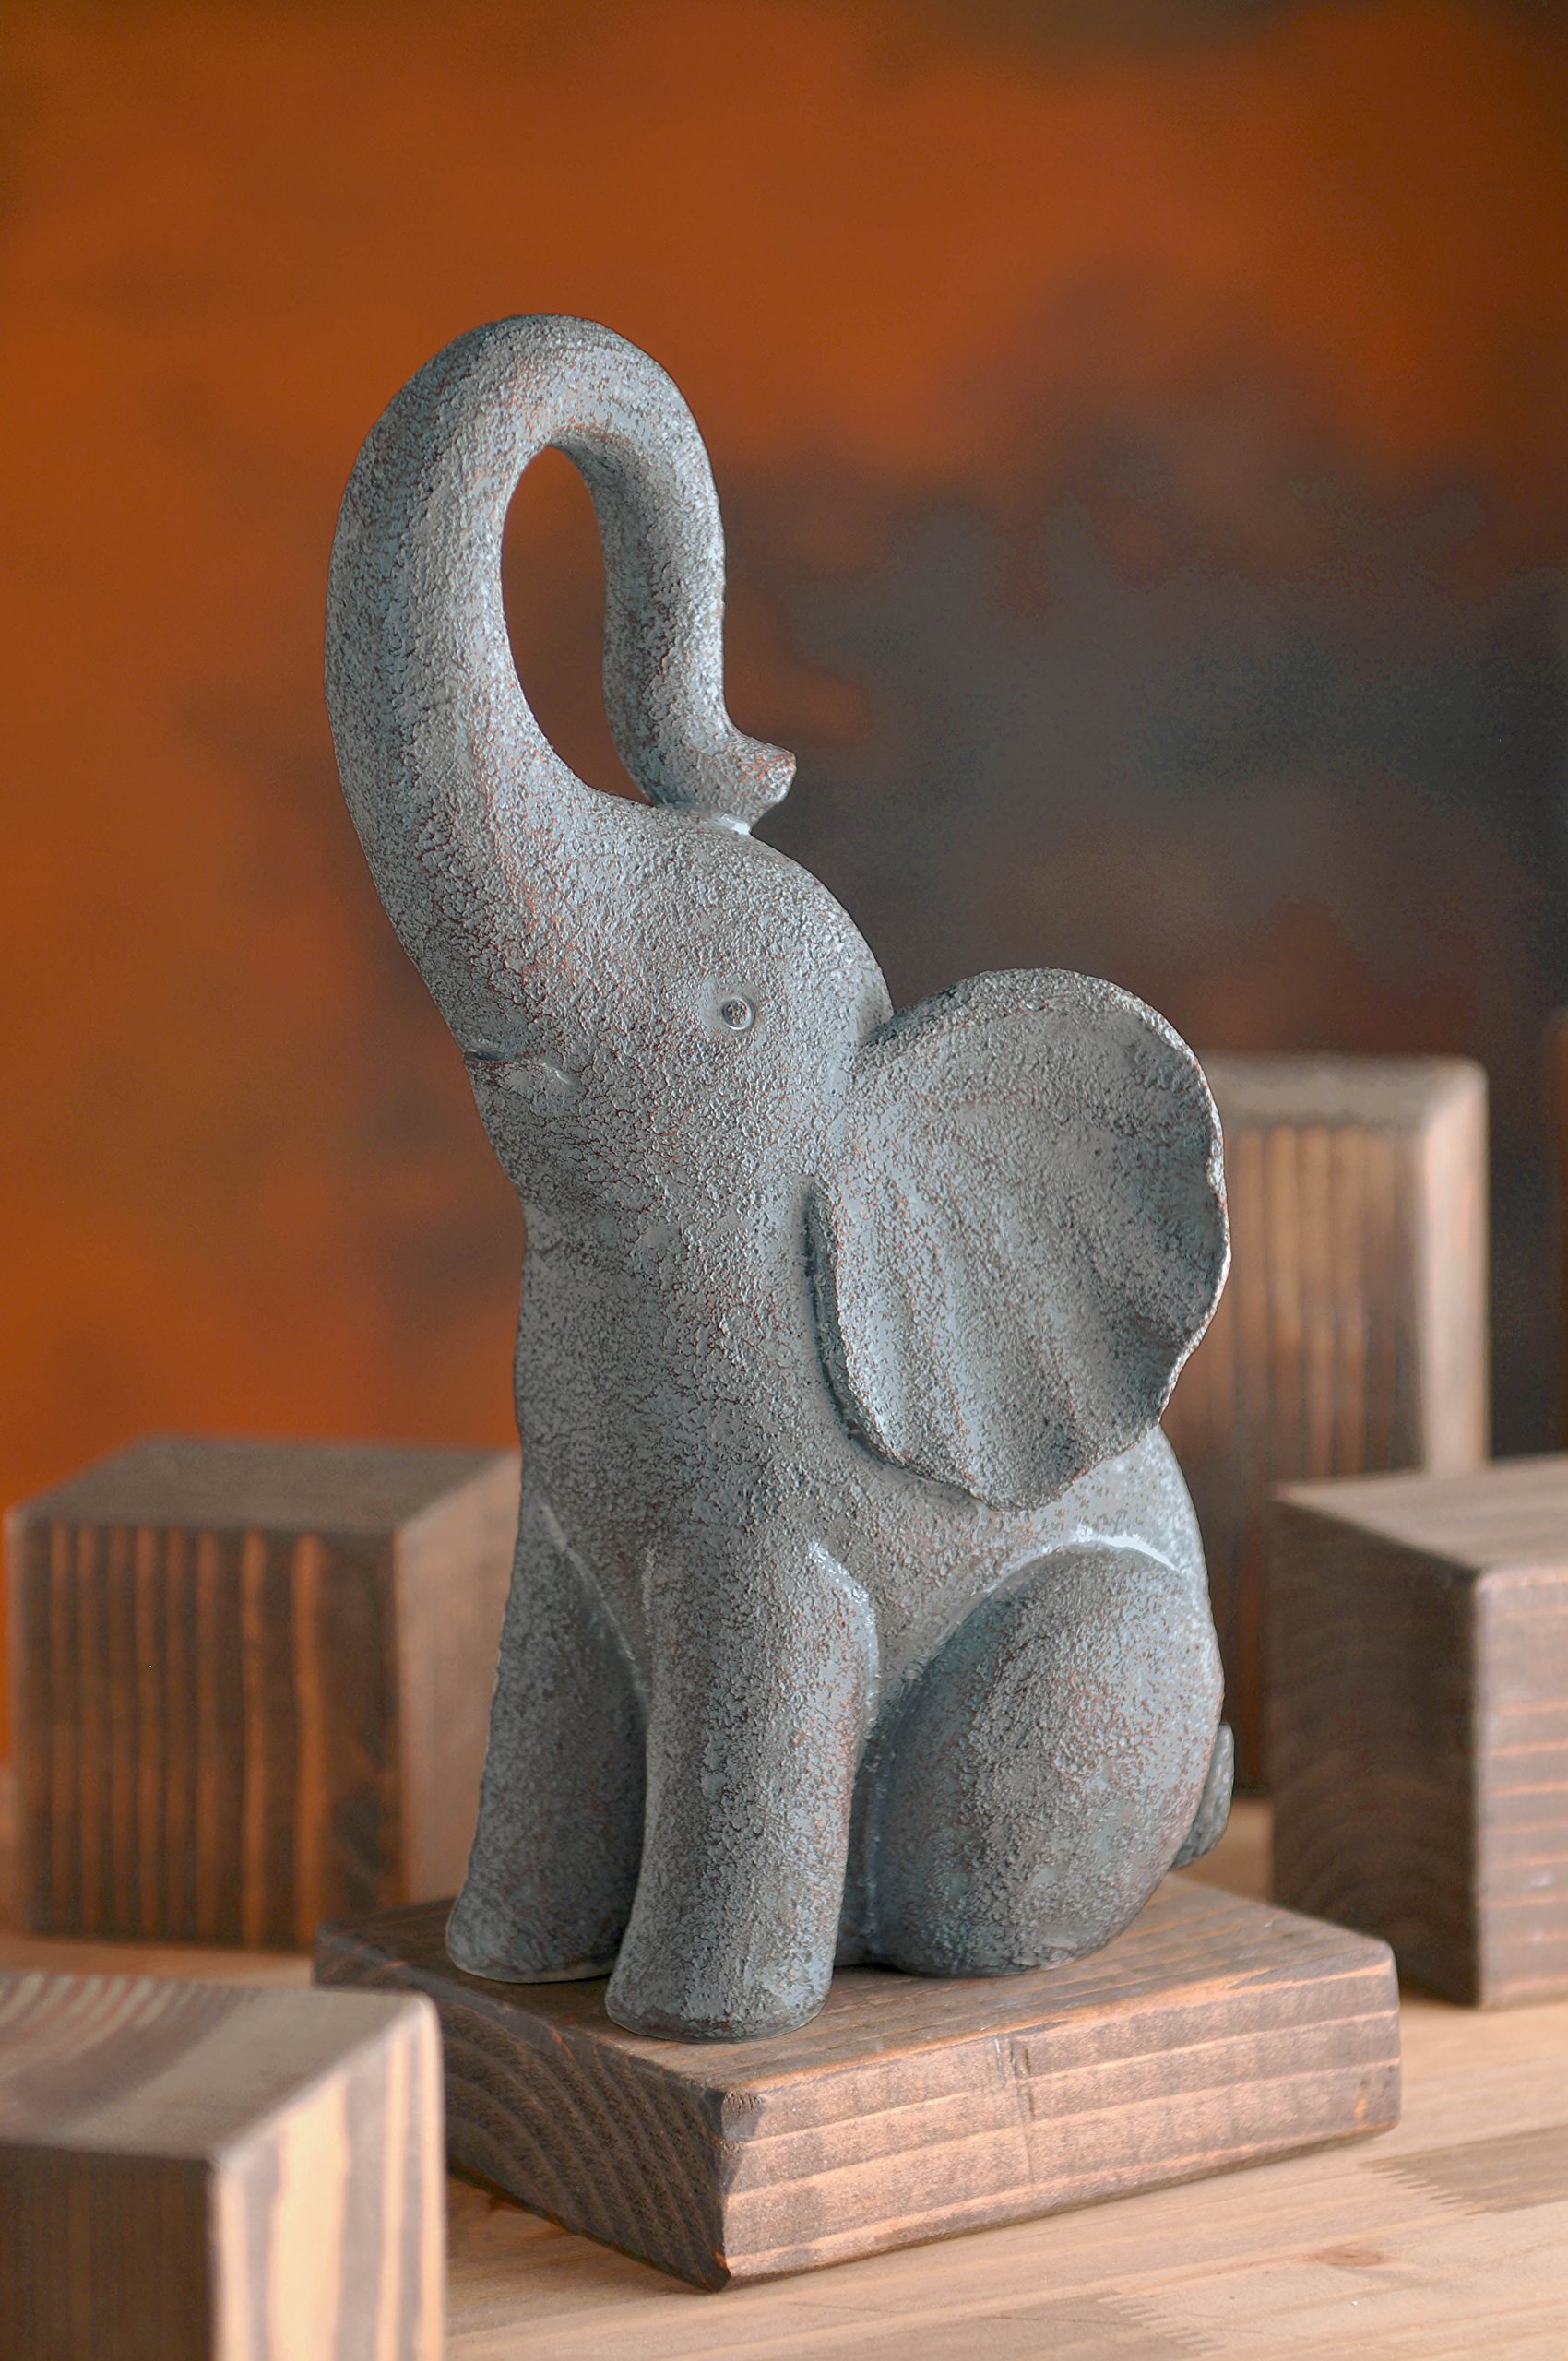 Grasslands Road World Garden Good Luck Elephant Statue - image 3 of 3